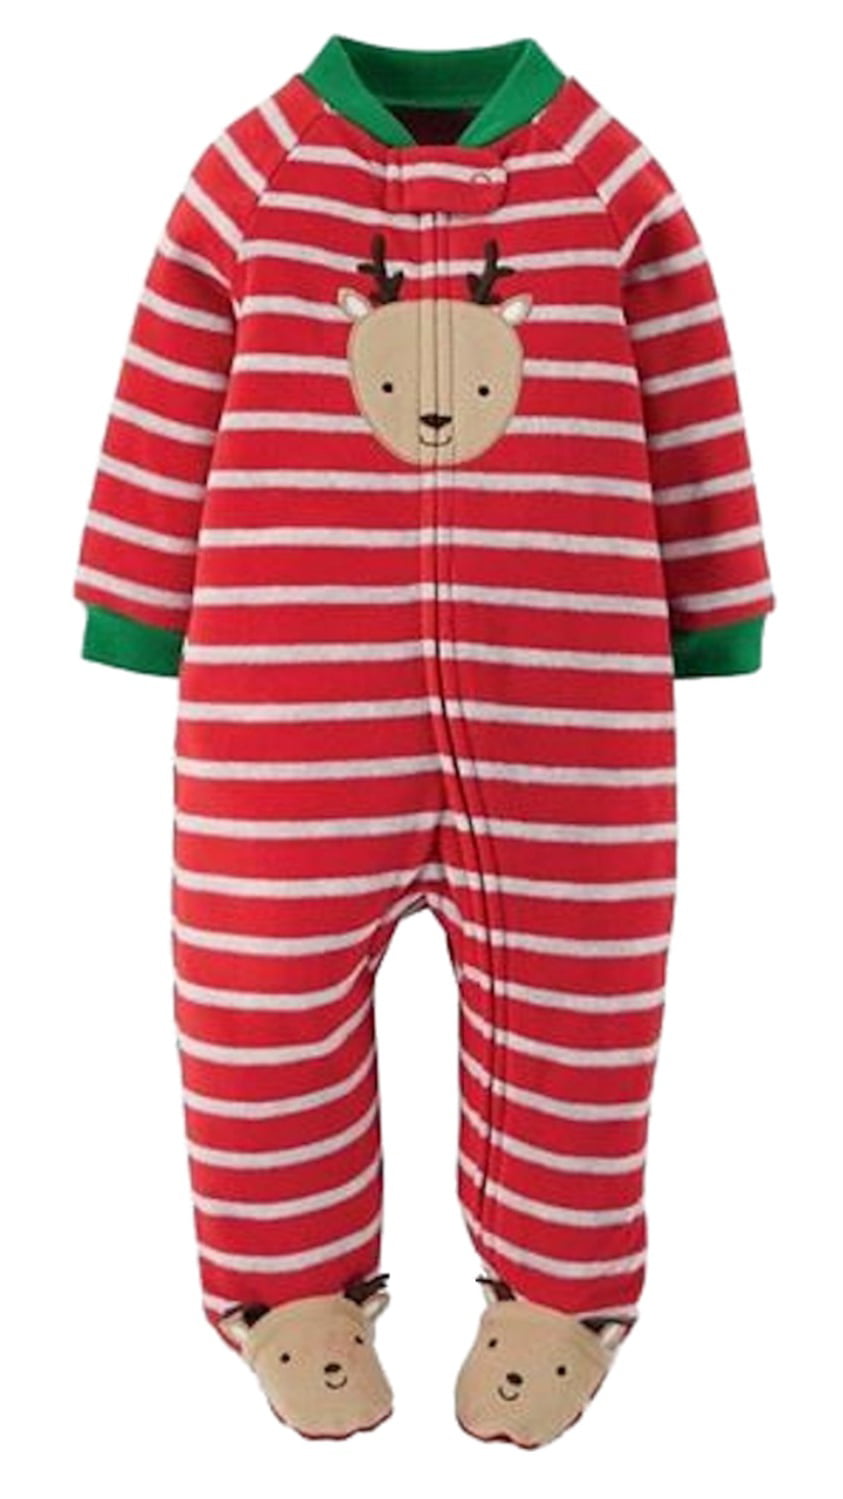 Carter's Carters Infant Boy Red Stripe Fleece Christmas Reindeer Pajama Sleeper NB Walmart